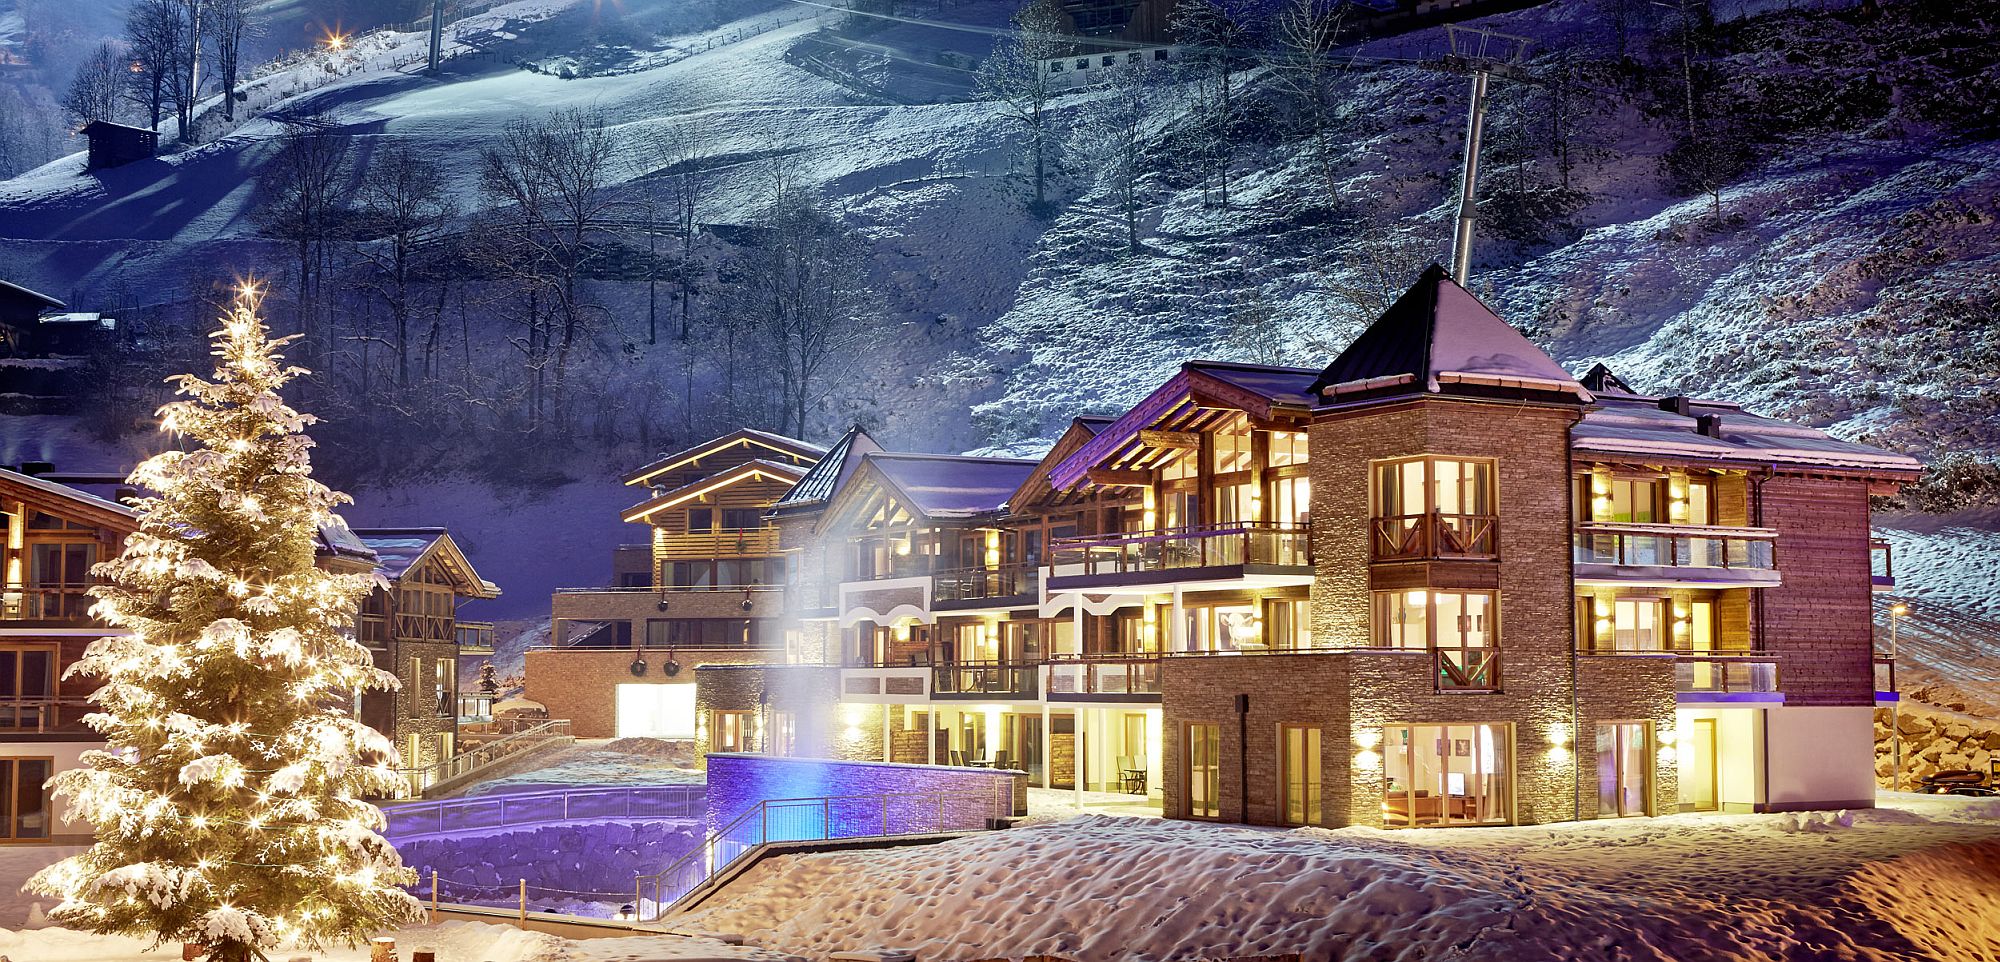 Classic elegance meets stunning ski slopes and luxury at Wildkogel Resort